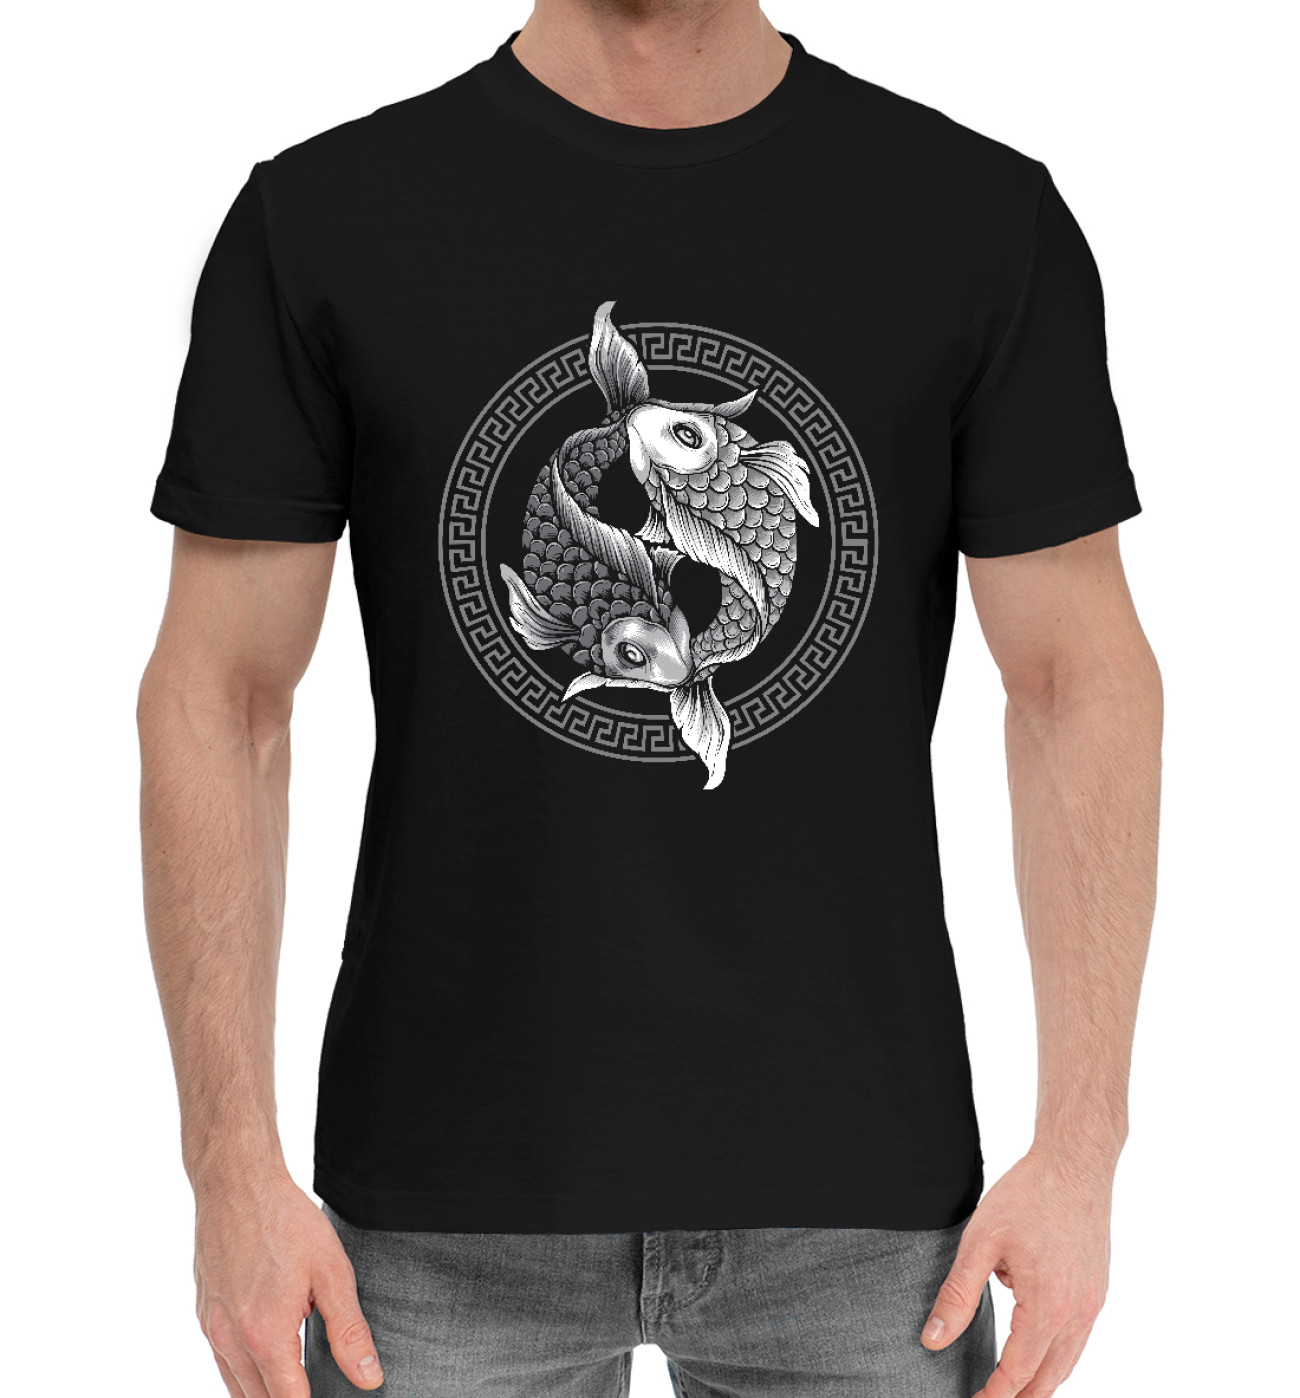 Мужская Хлопковая футболка Рыбный Инь Янь, артикул: RYB-933112-hfu-2